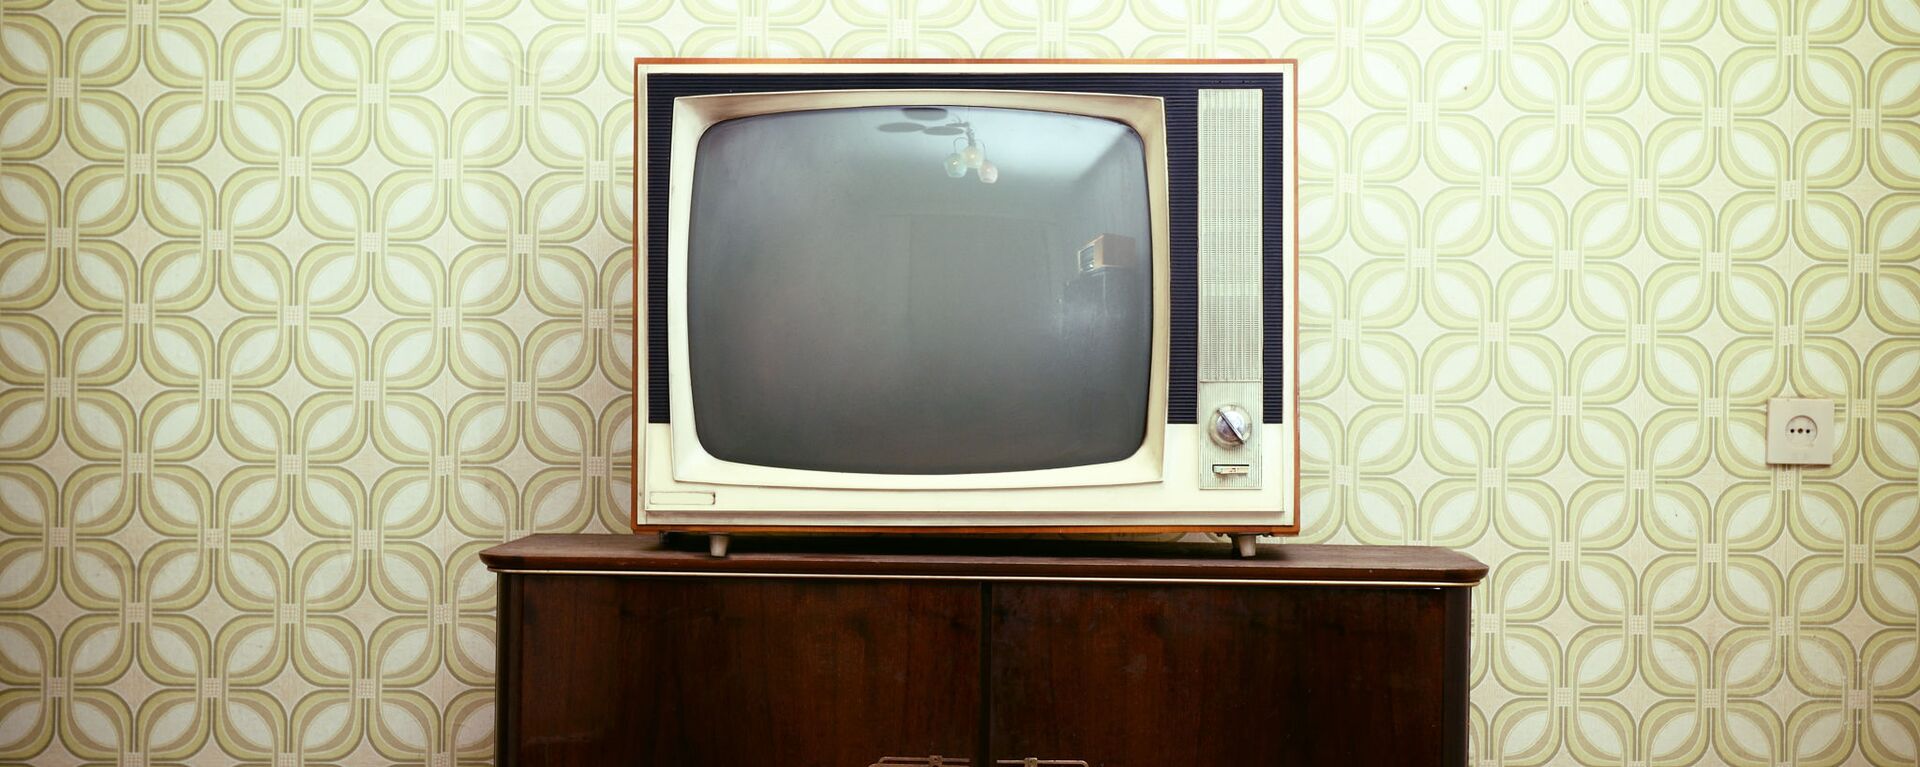 Старый телевизор  - Sputnik Молдова, 1920, 21.11.2021